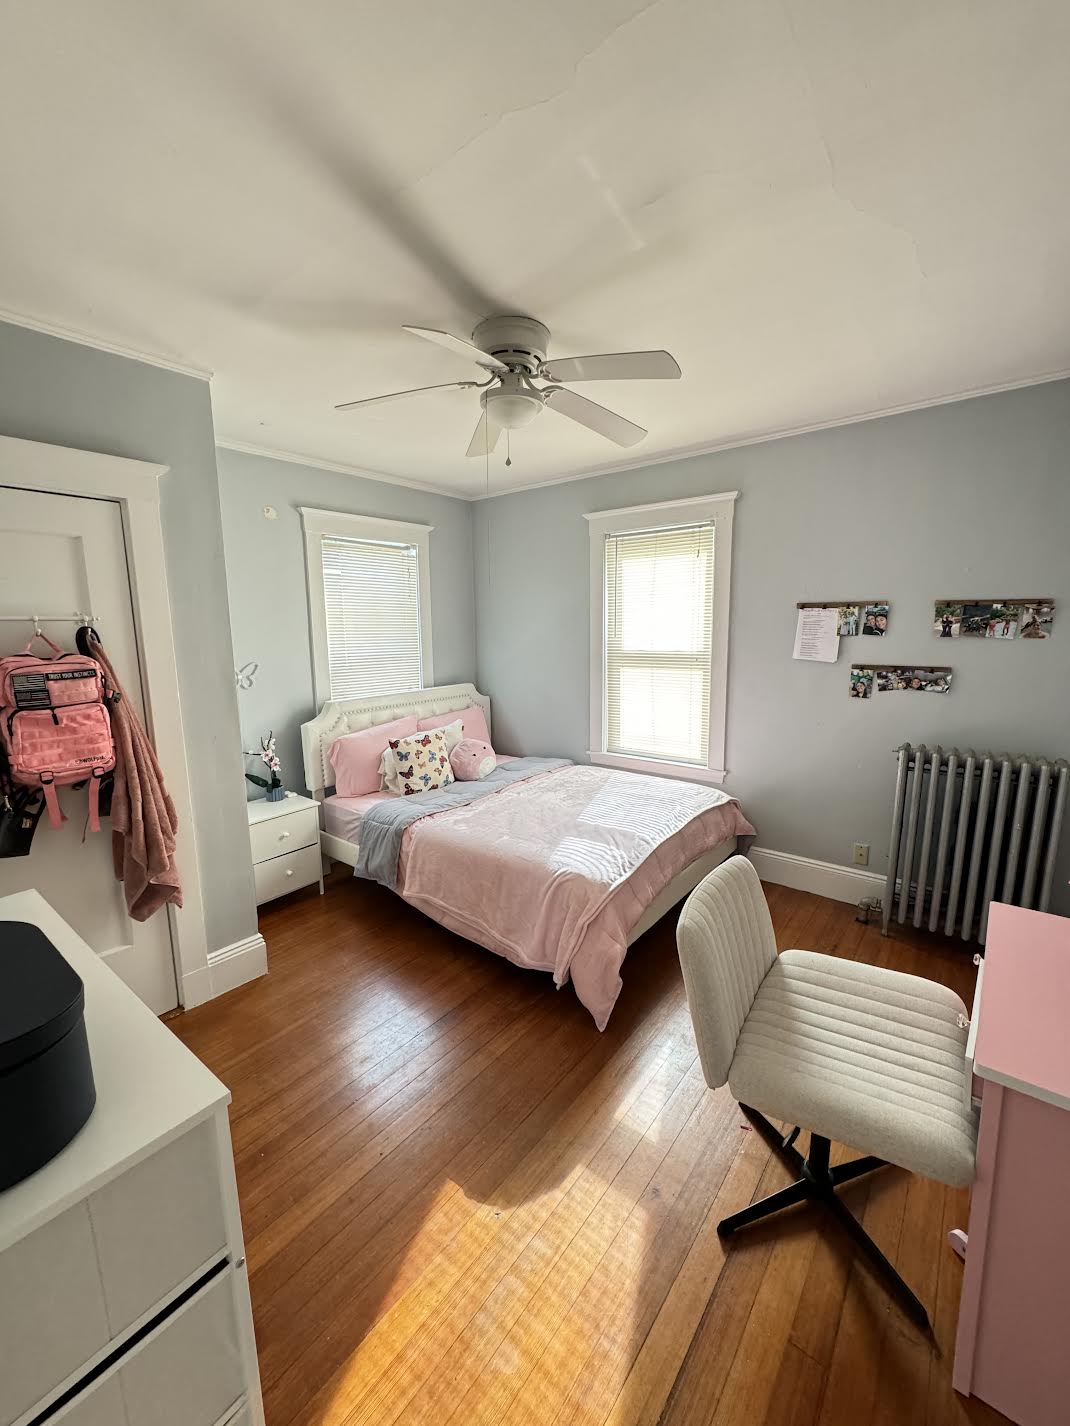 Photos of apartment on Foster St.,Boston MA 02135